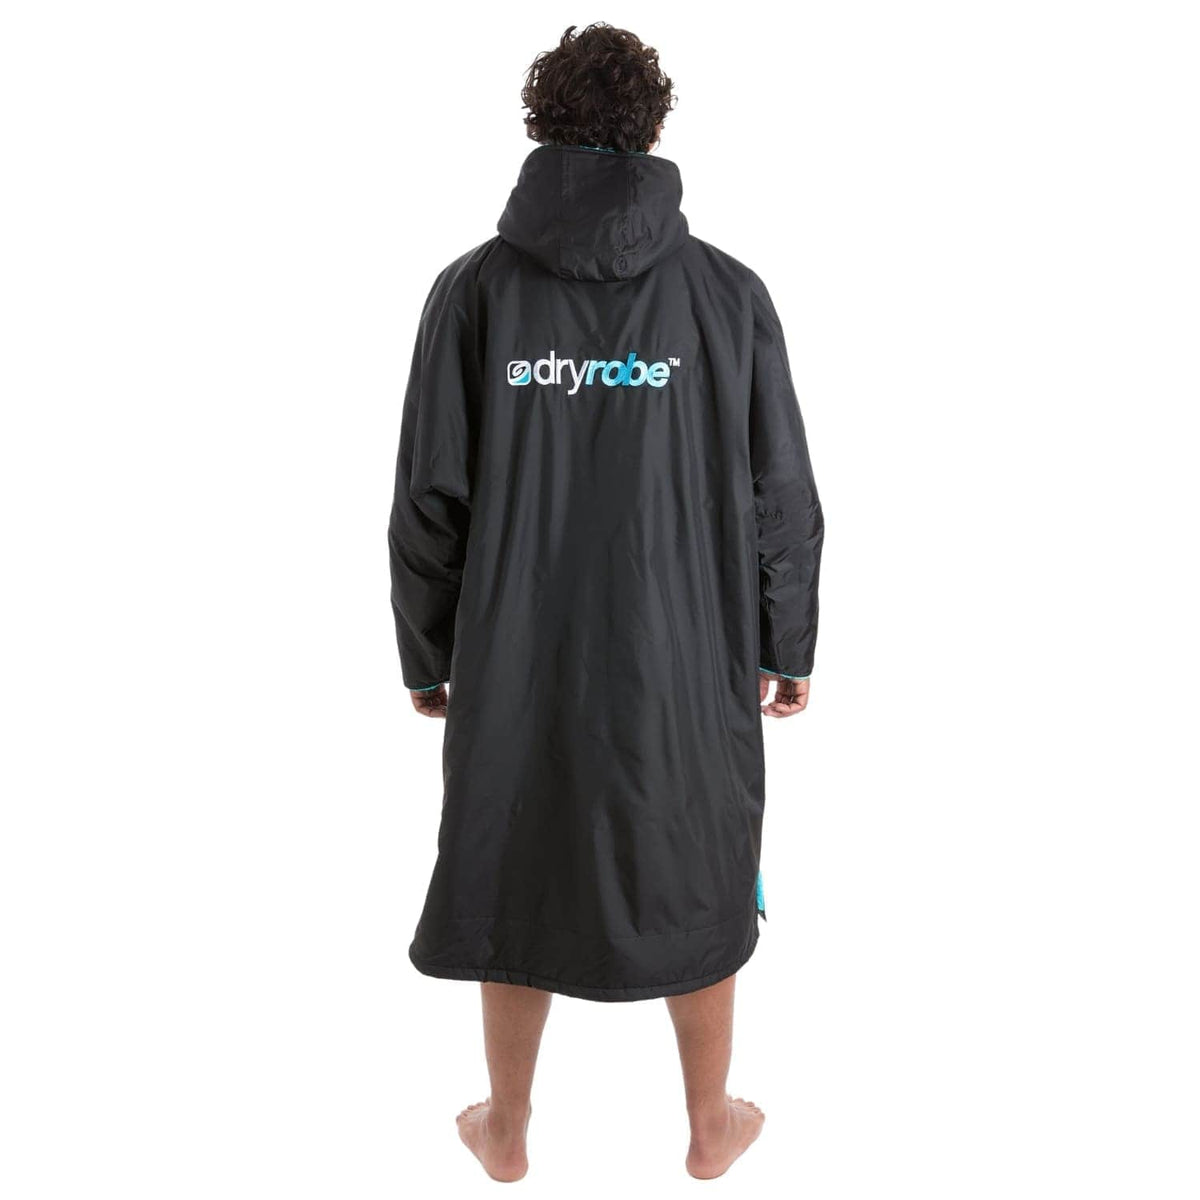 Dryrobe Advance Long Sleeve Drying &amp; Changing Robe Black Blue - Changing Robe Poncho Towel by Dryrobe